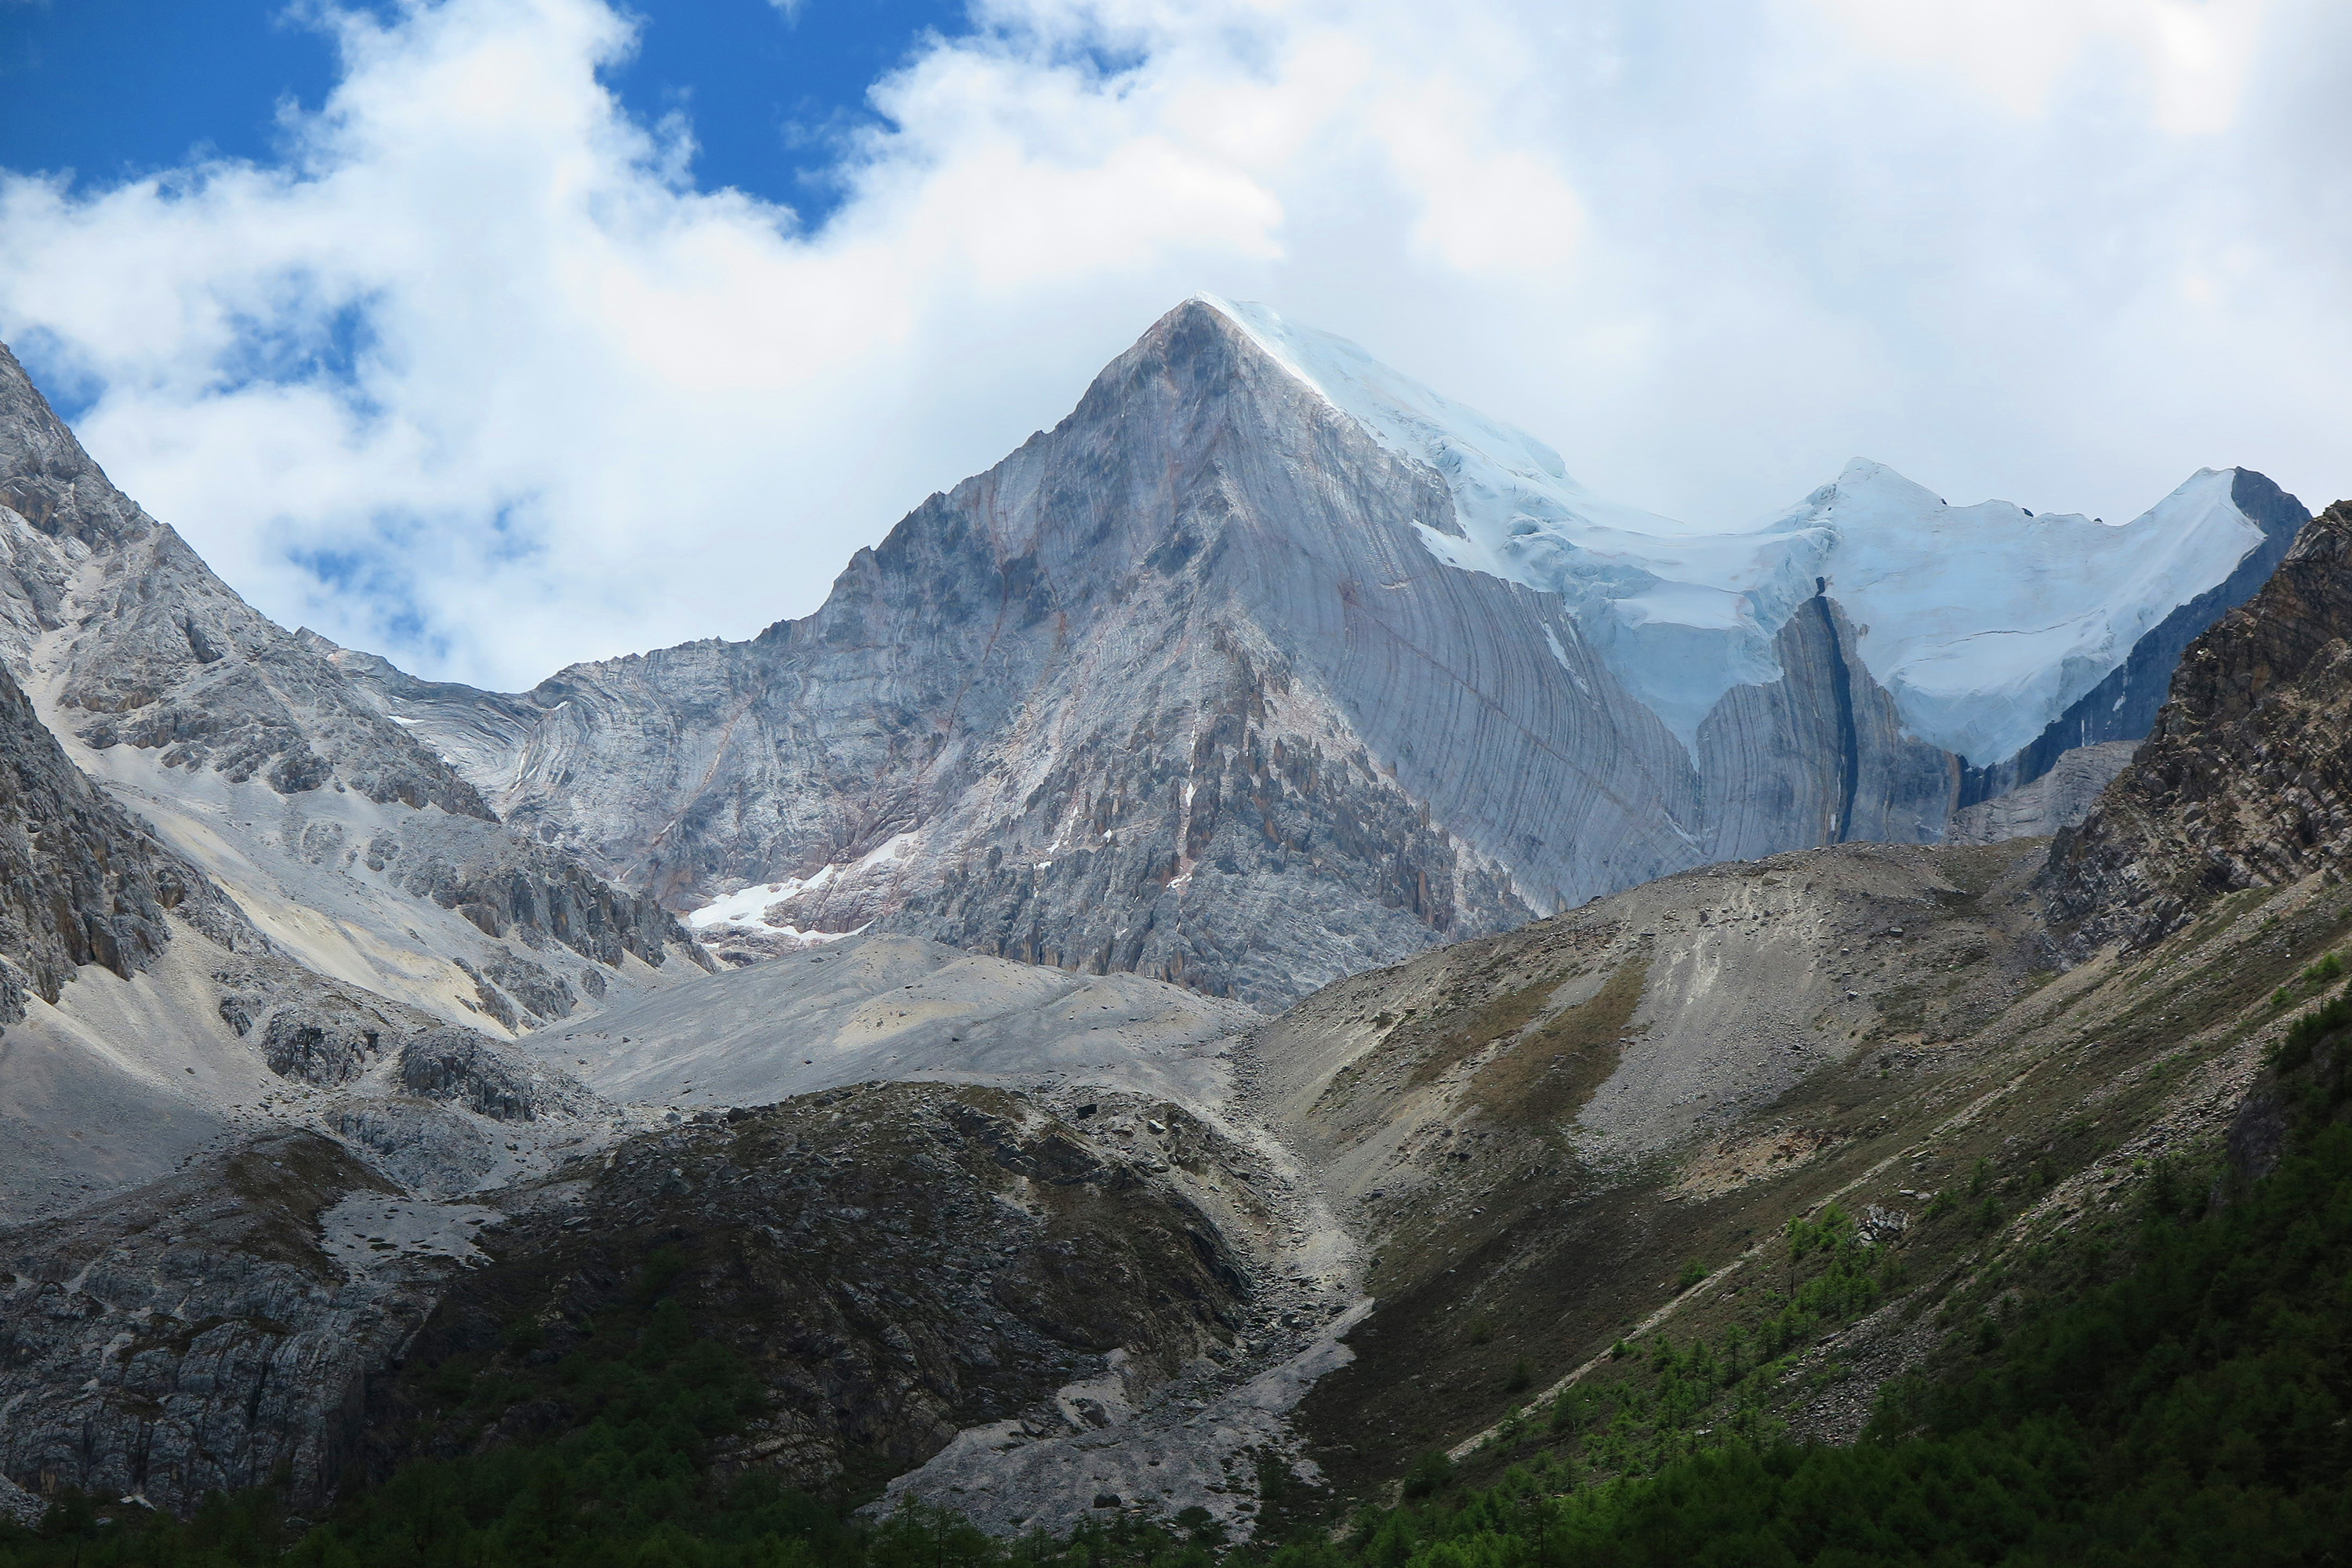 The imposing peaks of Yading. Image by Tienlon Ho / londoninfopage